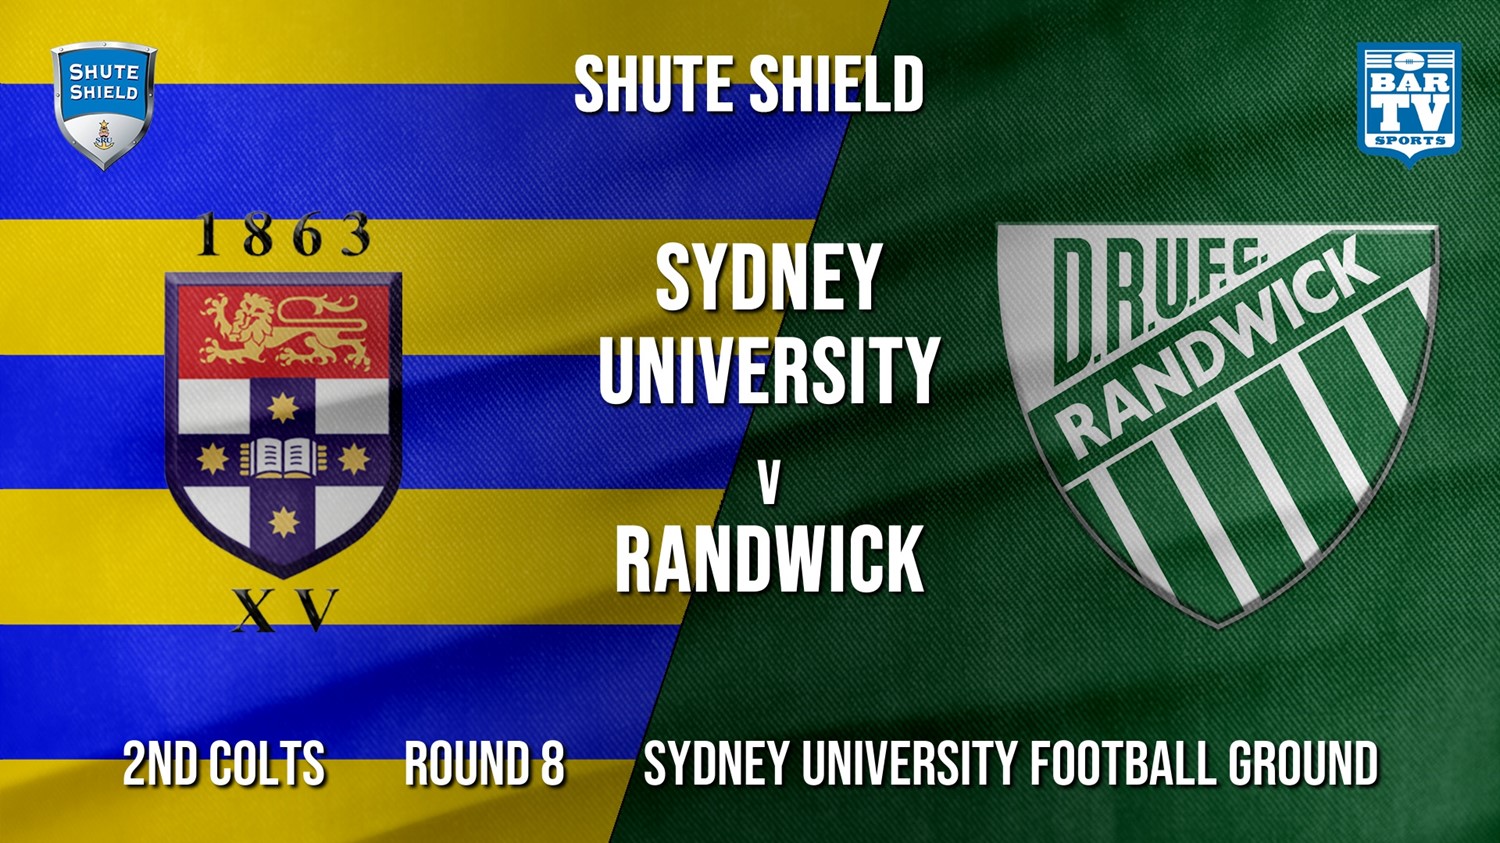 Shute Shield Round 10 - 2nd Colts - Sydney University v Randwick Minigame Slate Image